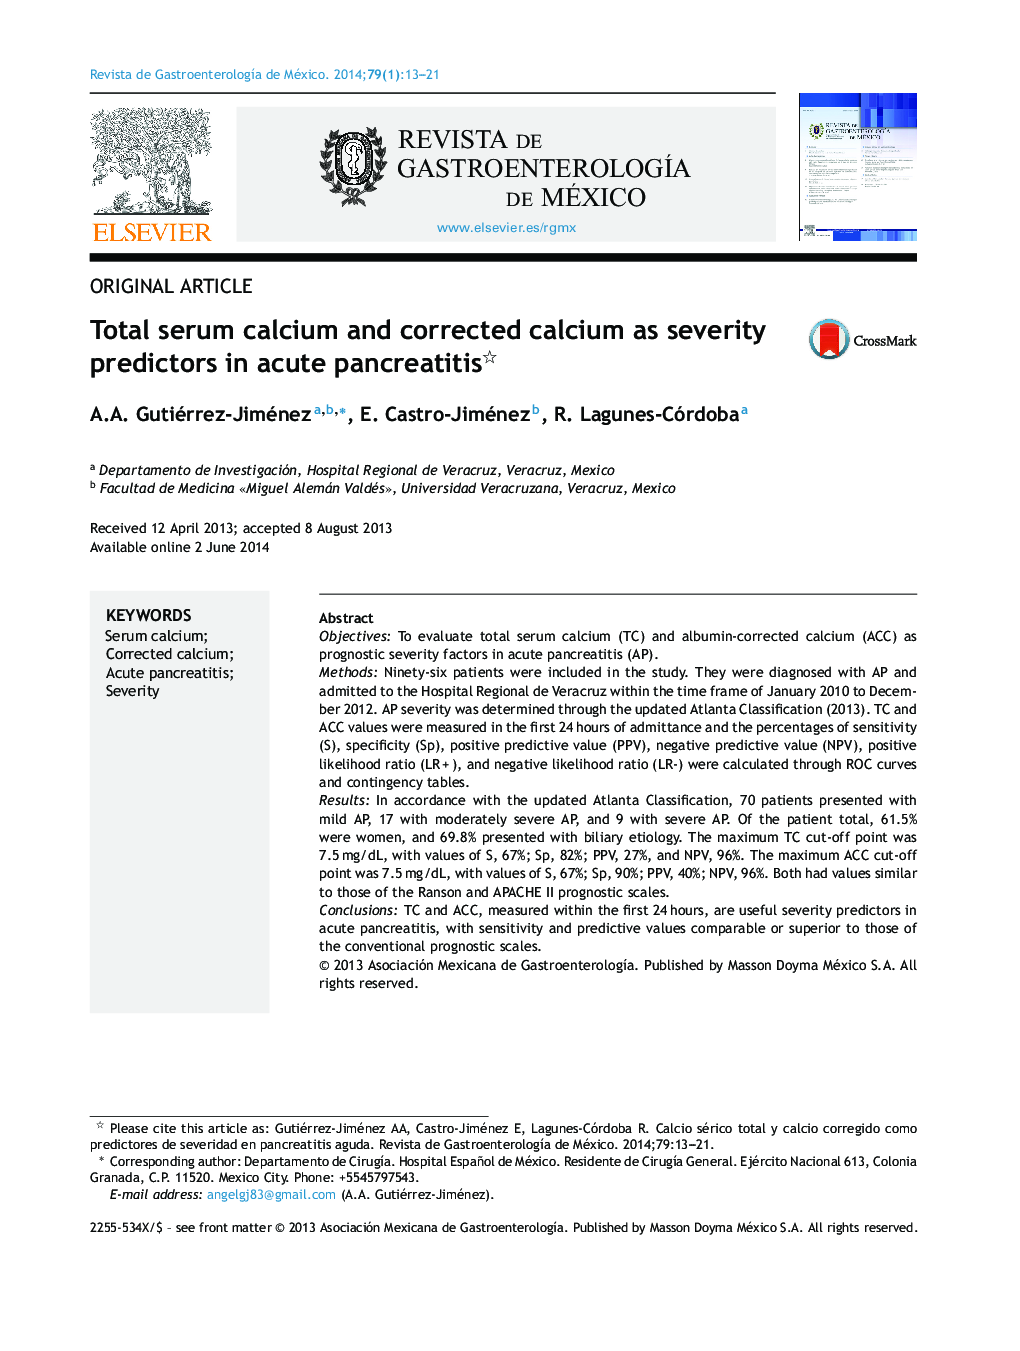 Total serum calcium and corrected calcium as severity predictors in acute pancreatitis 